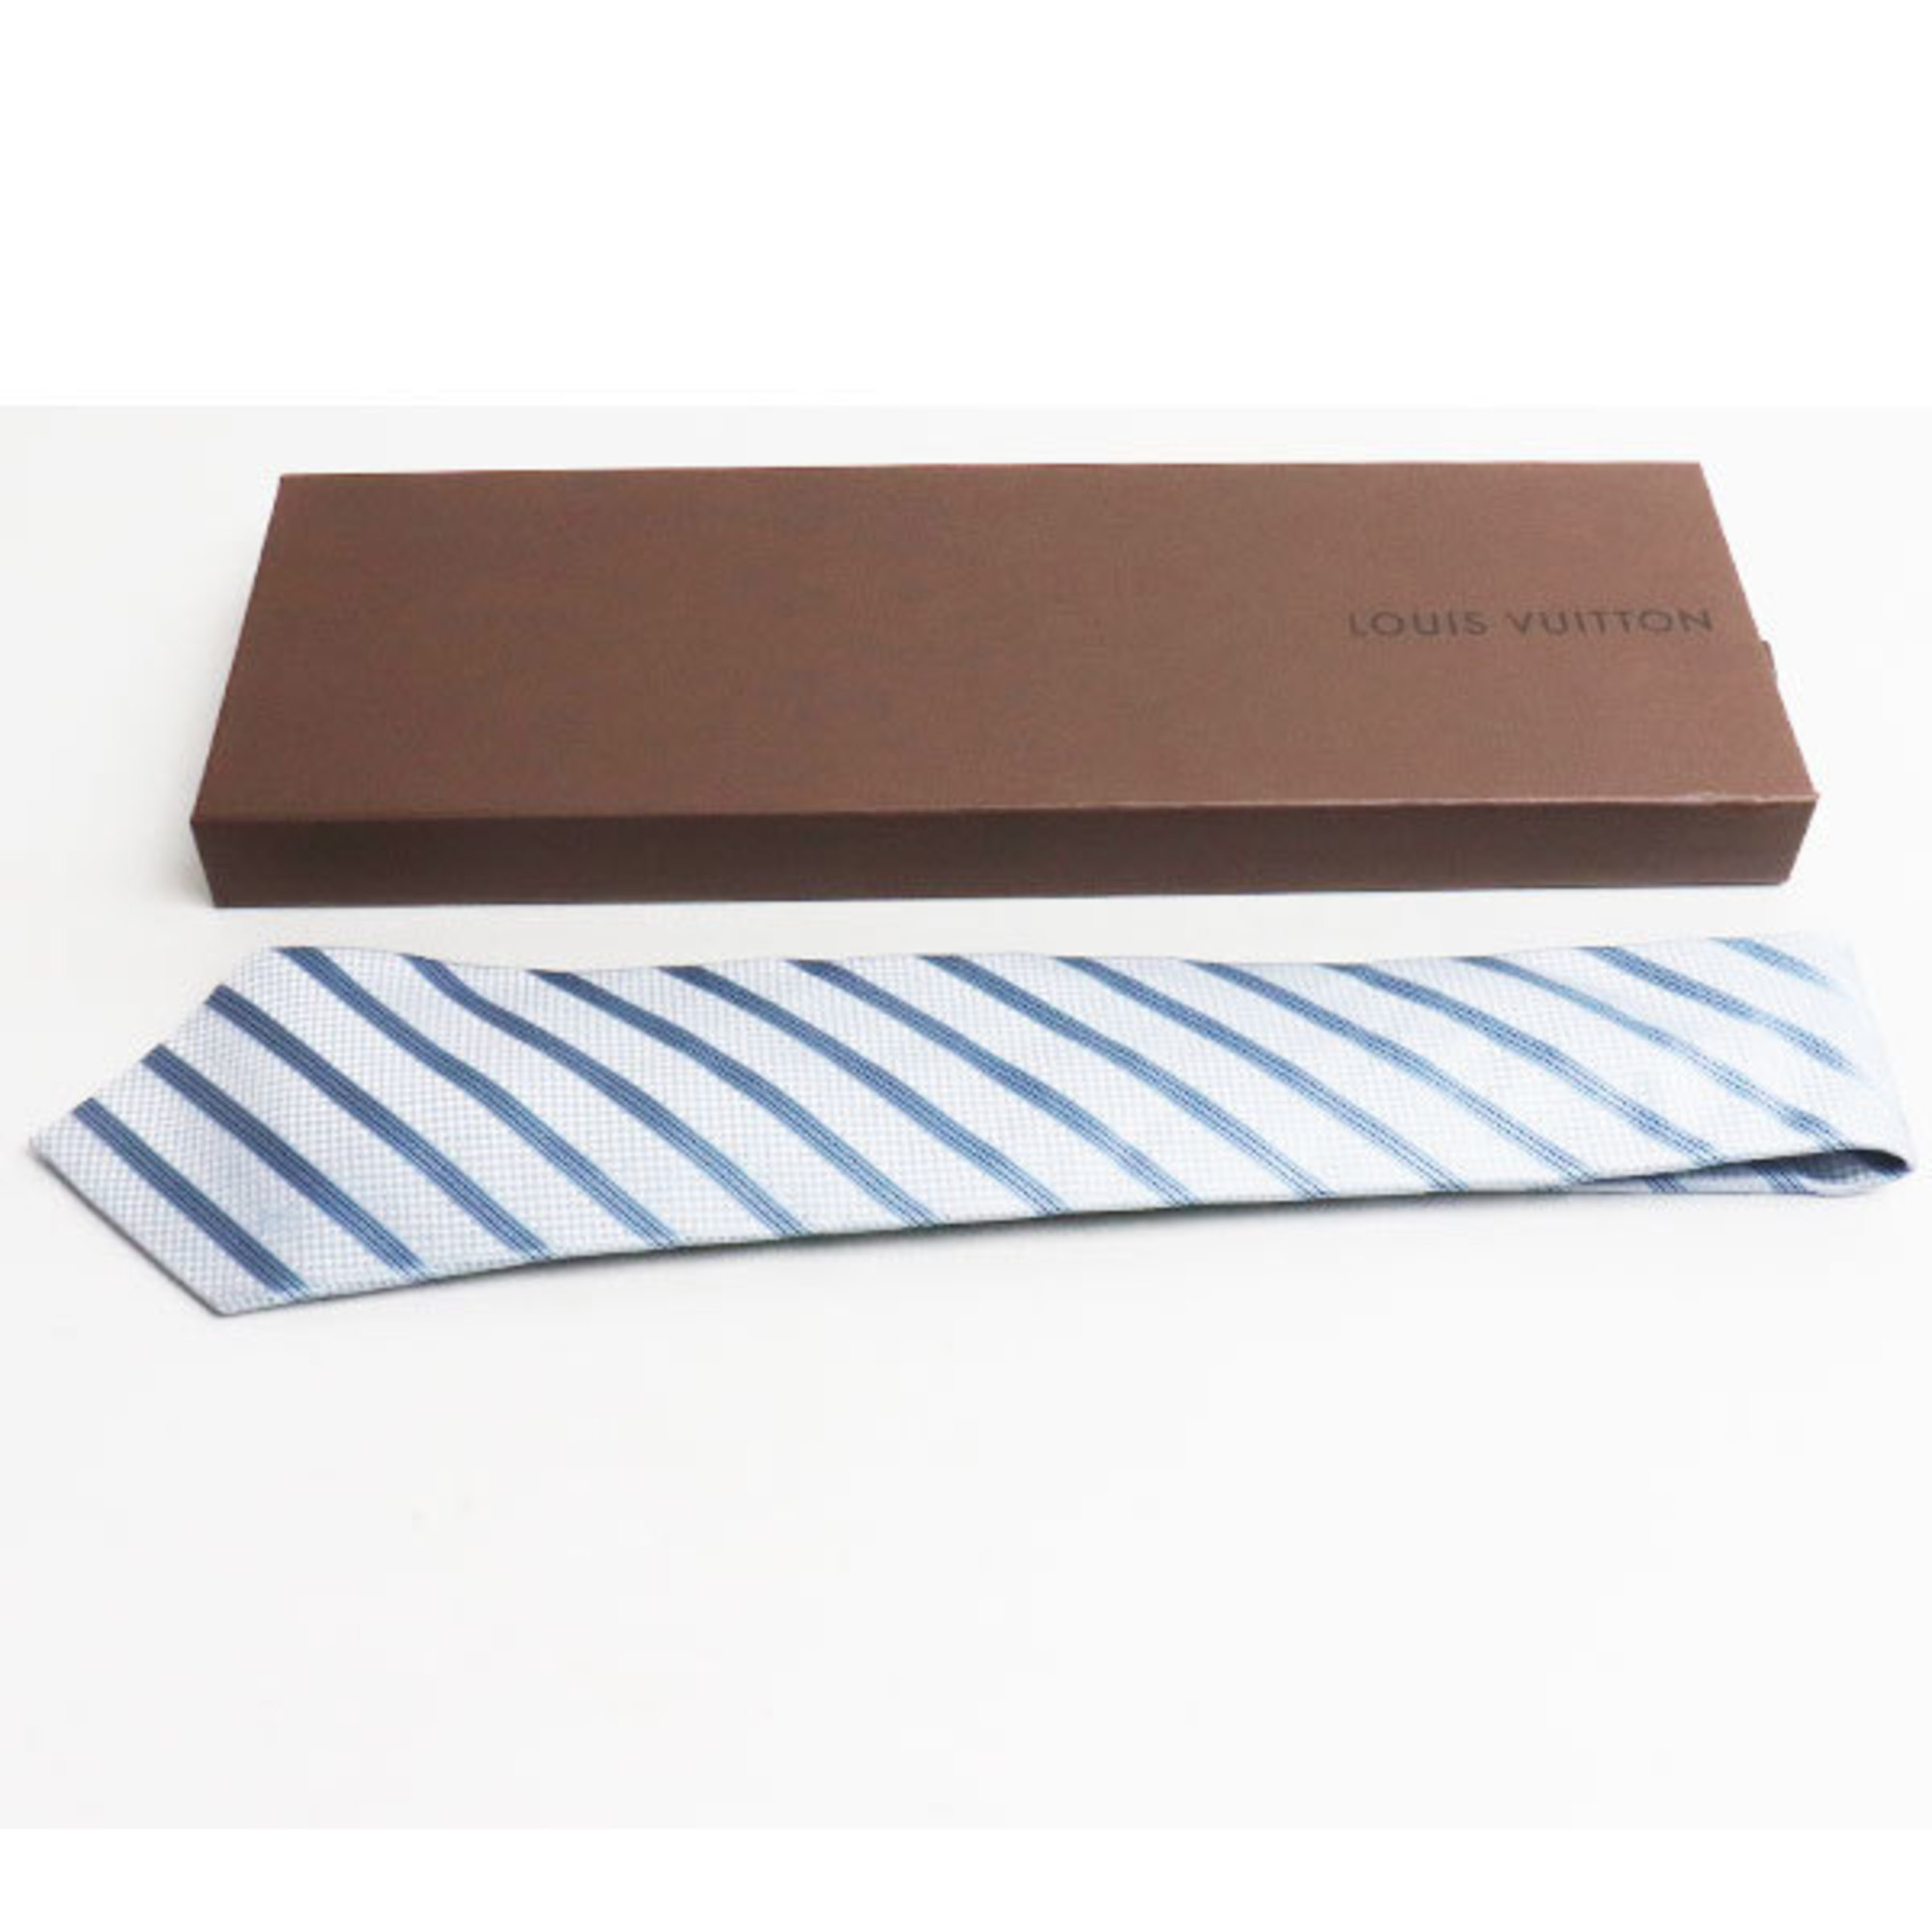 LOUIS VUITTON Louis Vuitton tie striped pattern 100% silk light blue